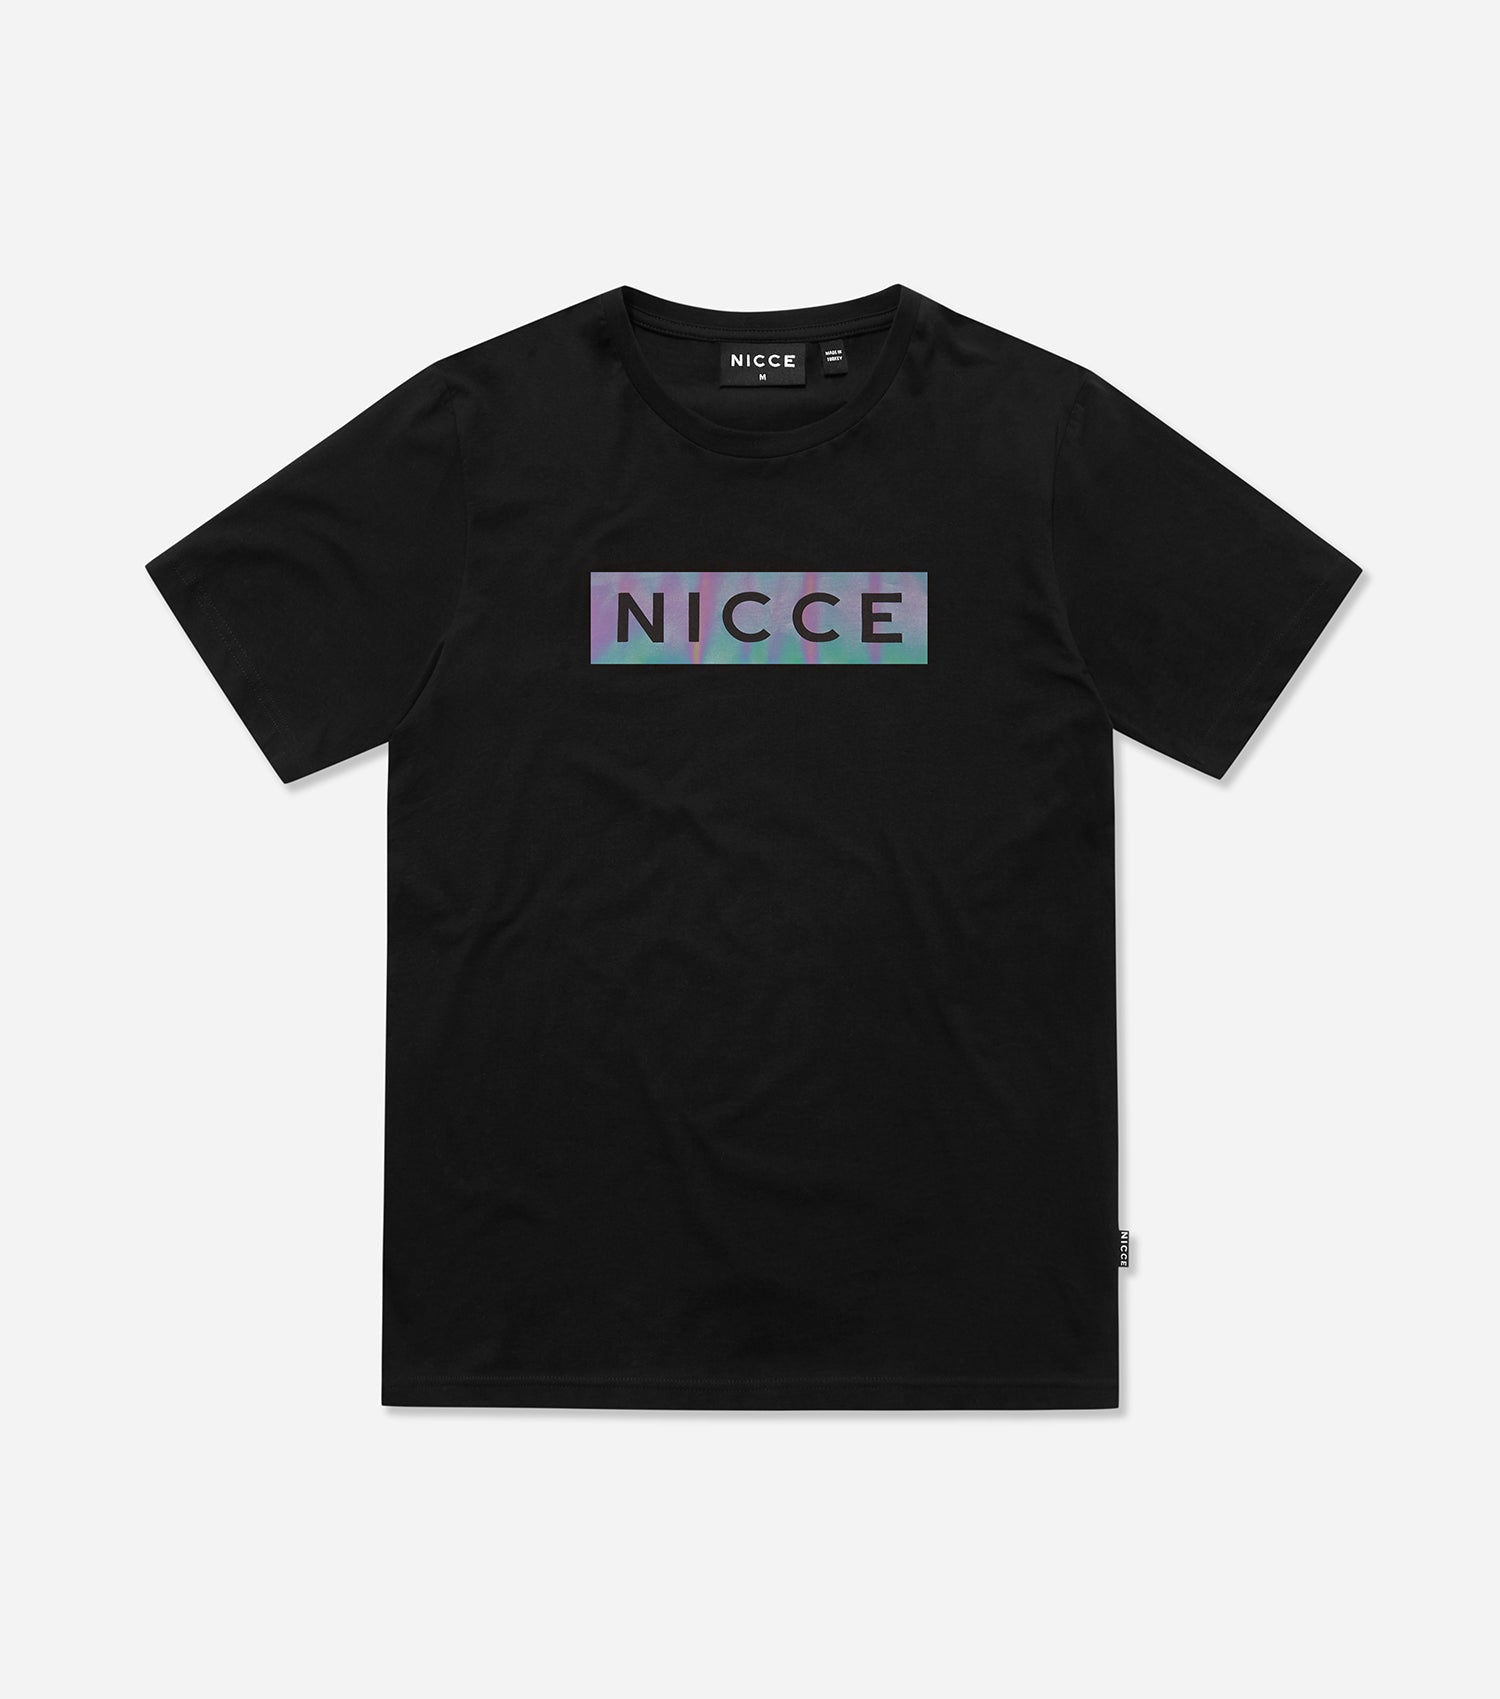 nicce t shirt